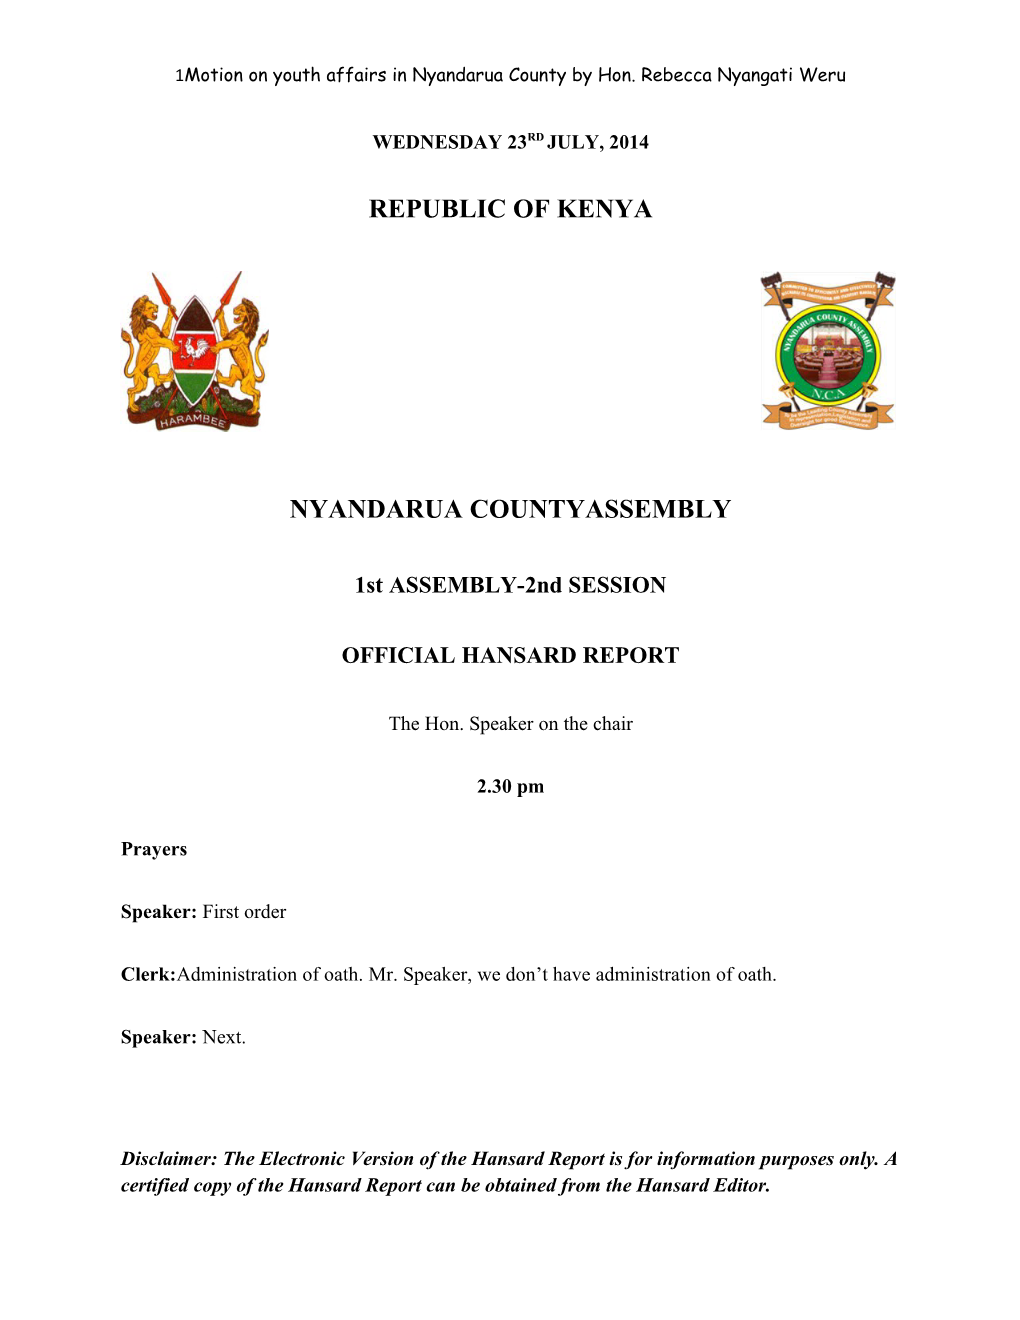 Motion on Youth Affairs in Nyandarua County by Hon. Rebecca Nyangati Weru